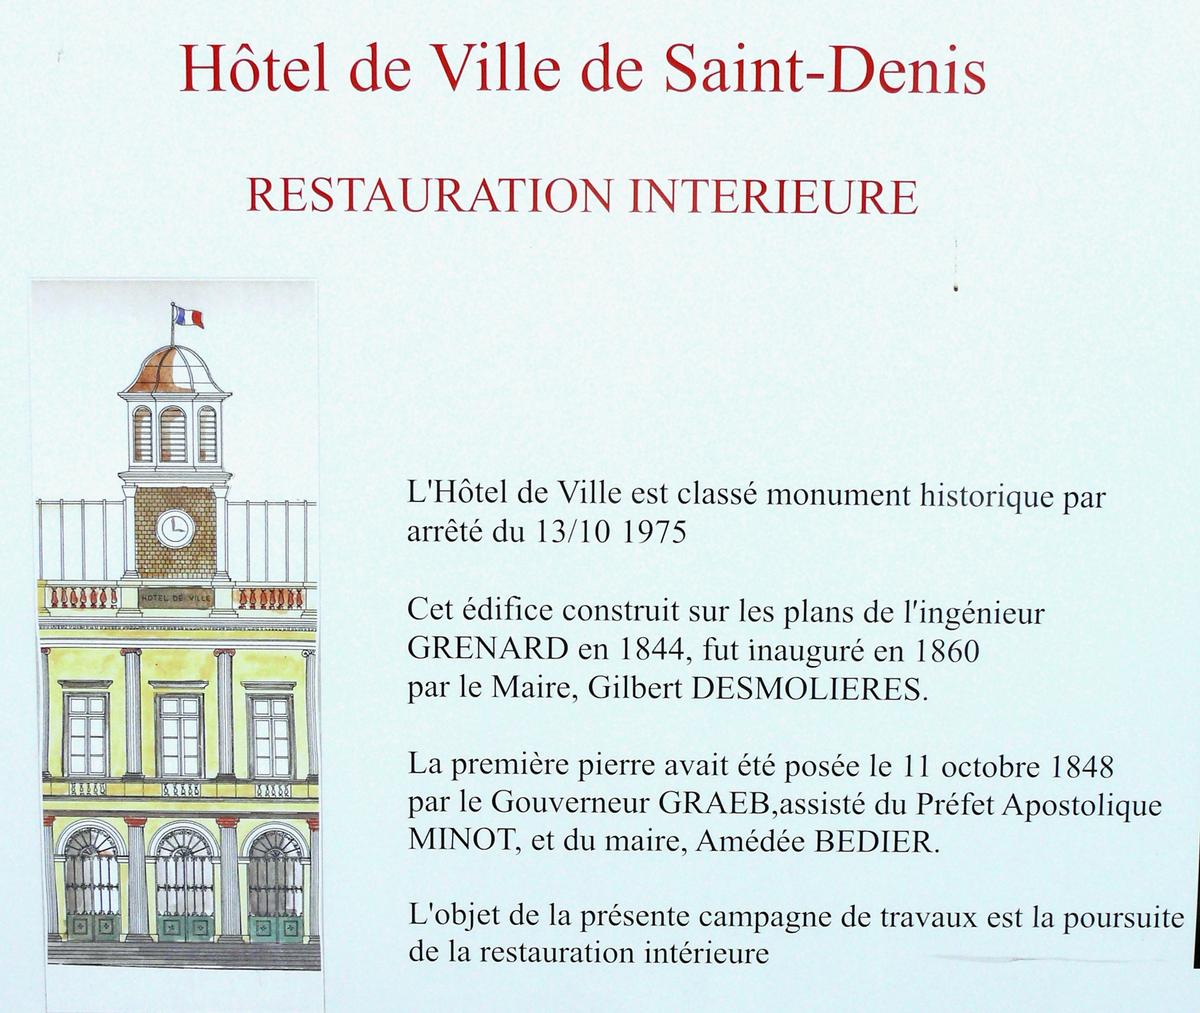 Saint-Denis - old town hall - information board 